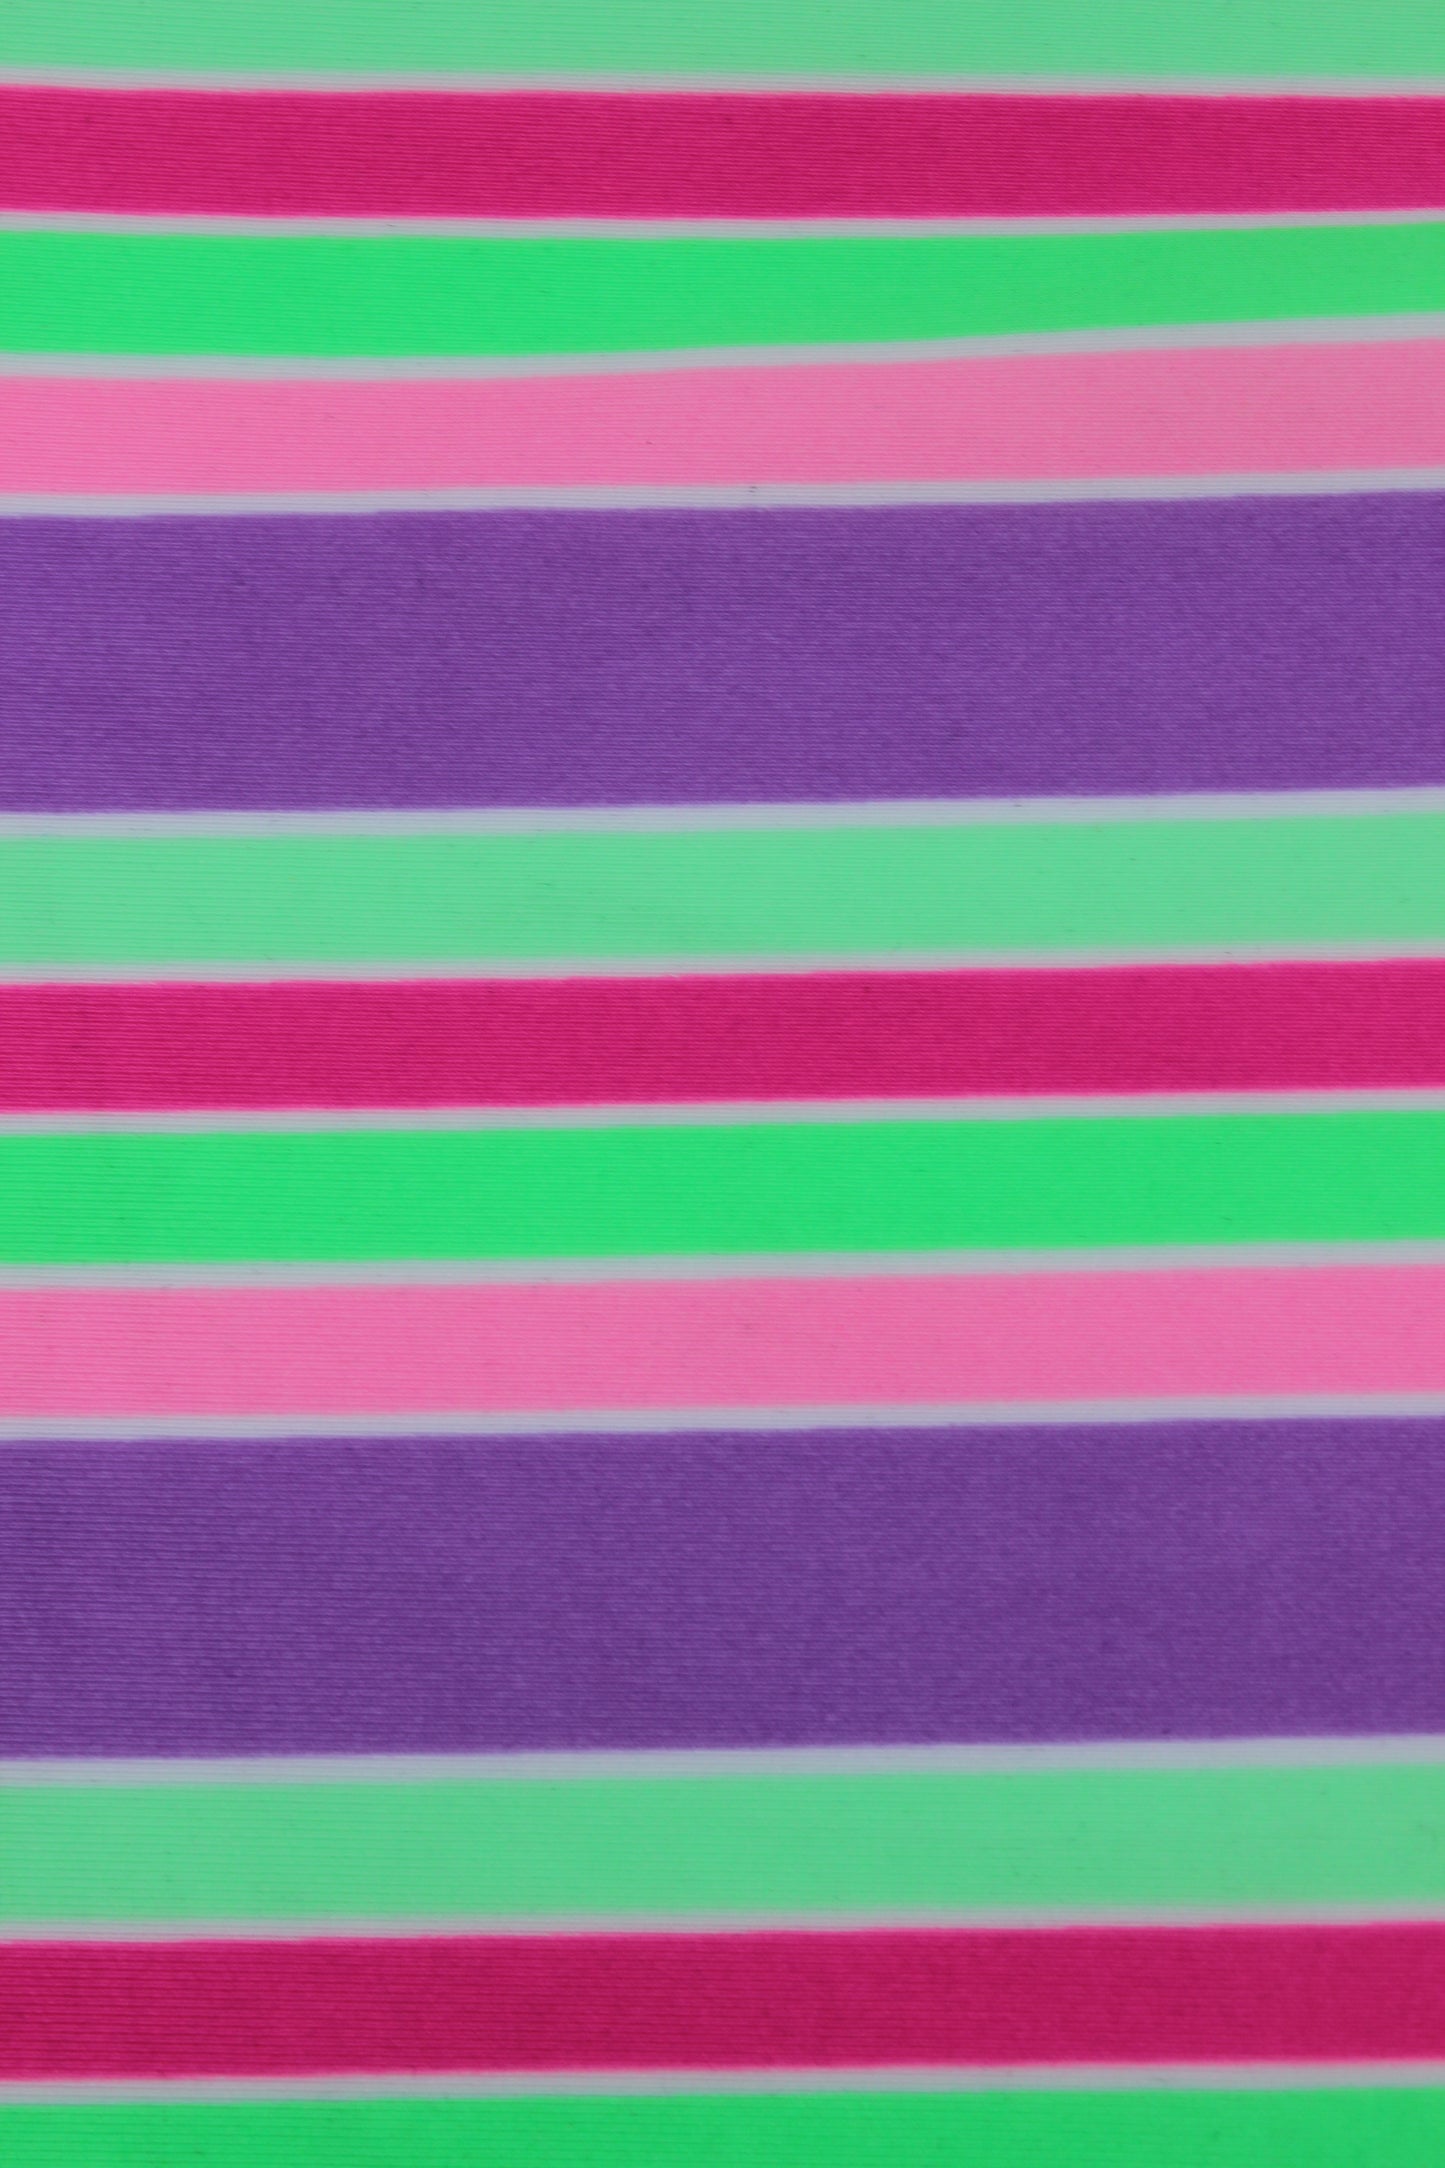 Printed Bright Striped Nylon Elastane Fabric (Spandex, lycra) - You’ve Got Me In Stitches